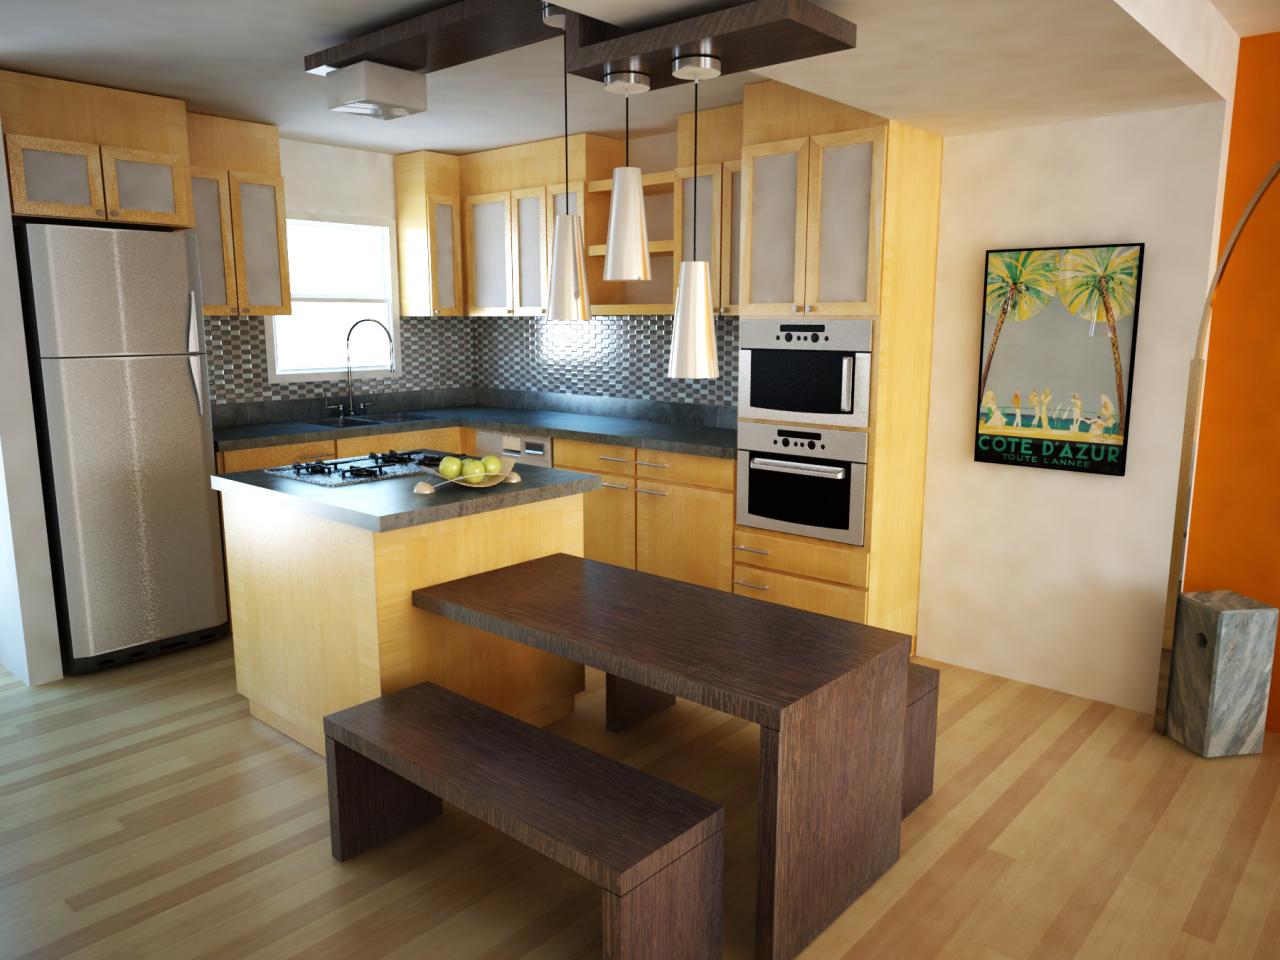 RMS_pilonieta-modern-quaint-kitchen_s4x3.jpg.rend.hgtvcom.1280.960.jpeg